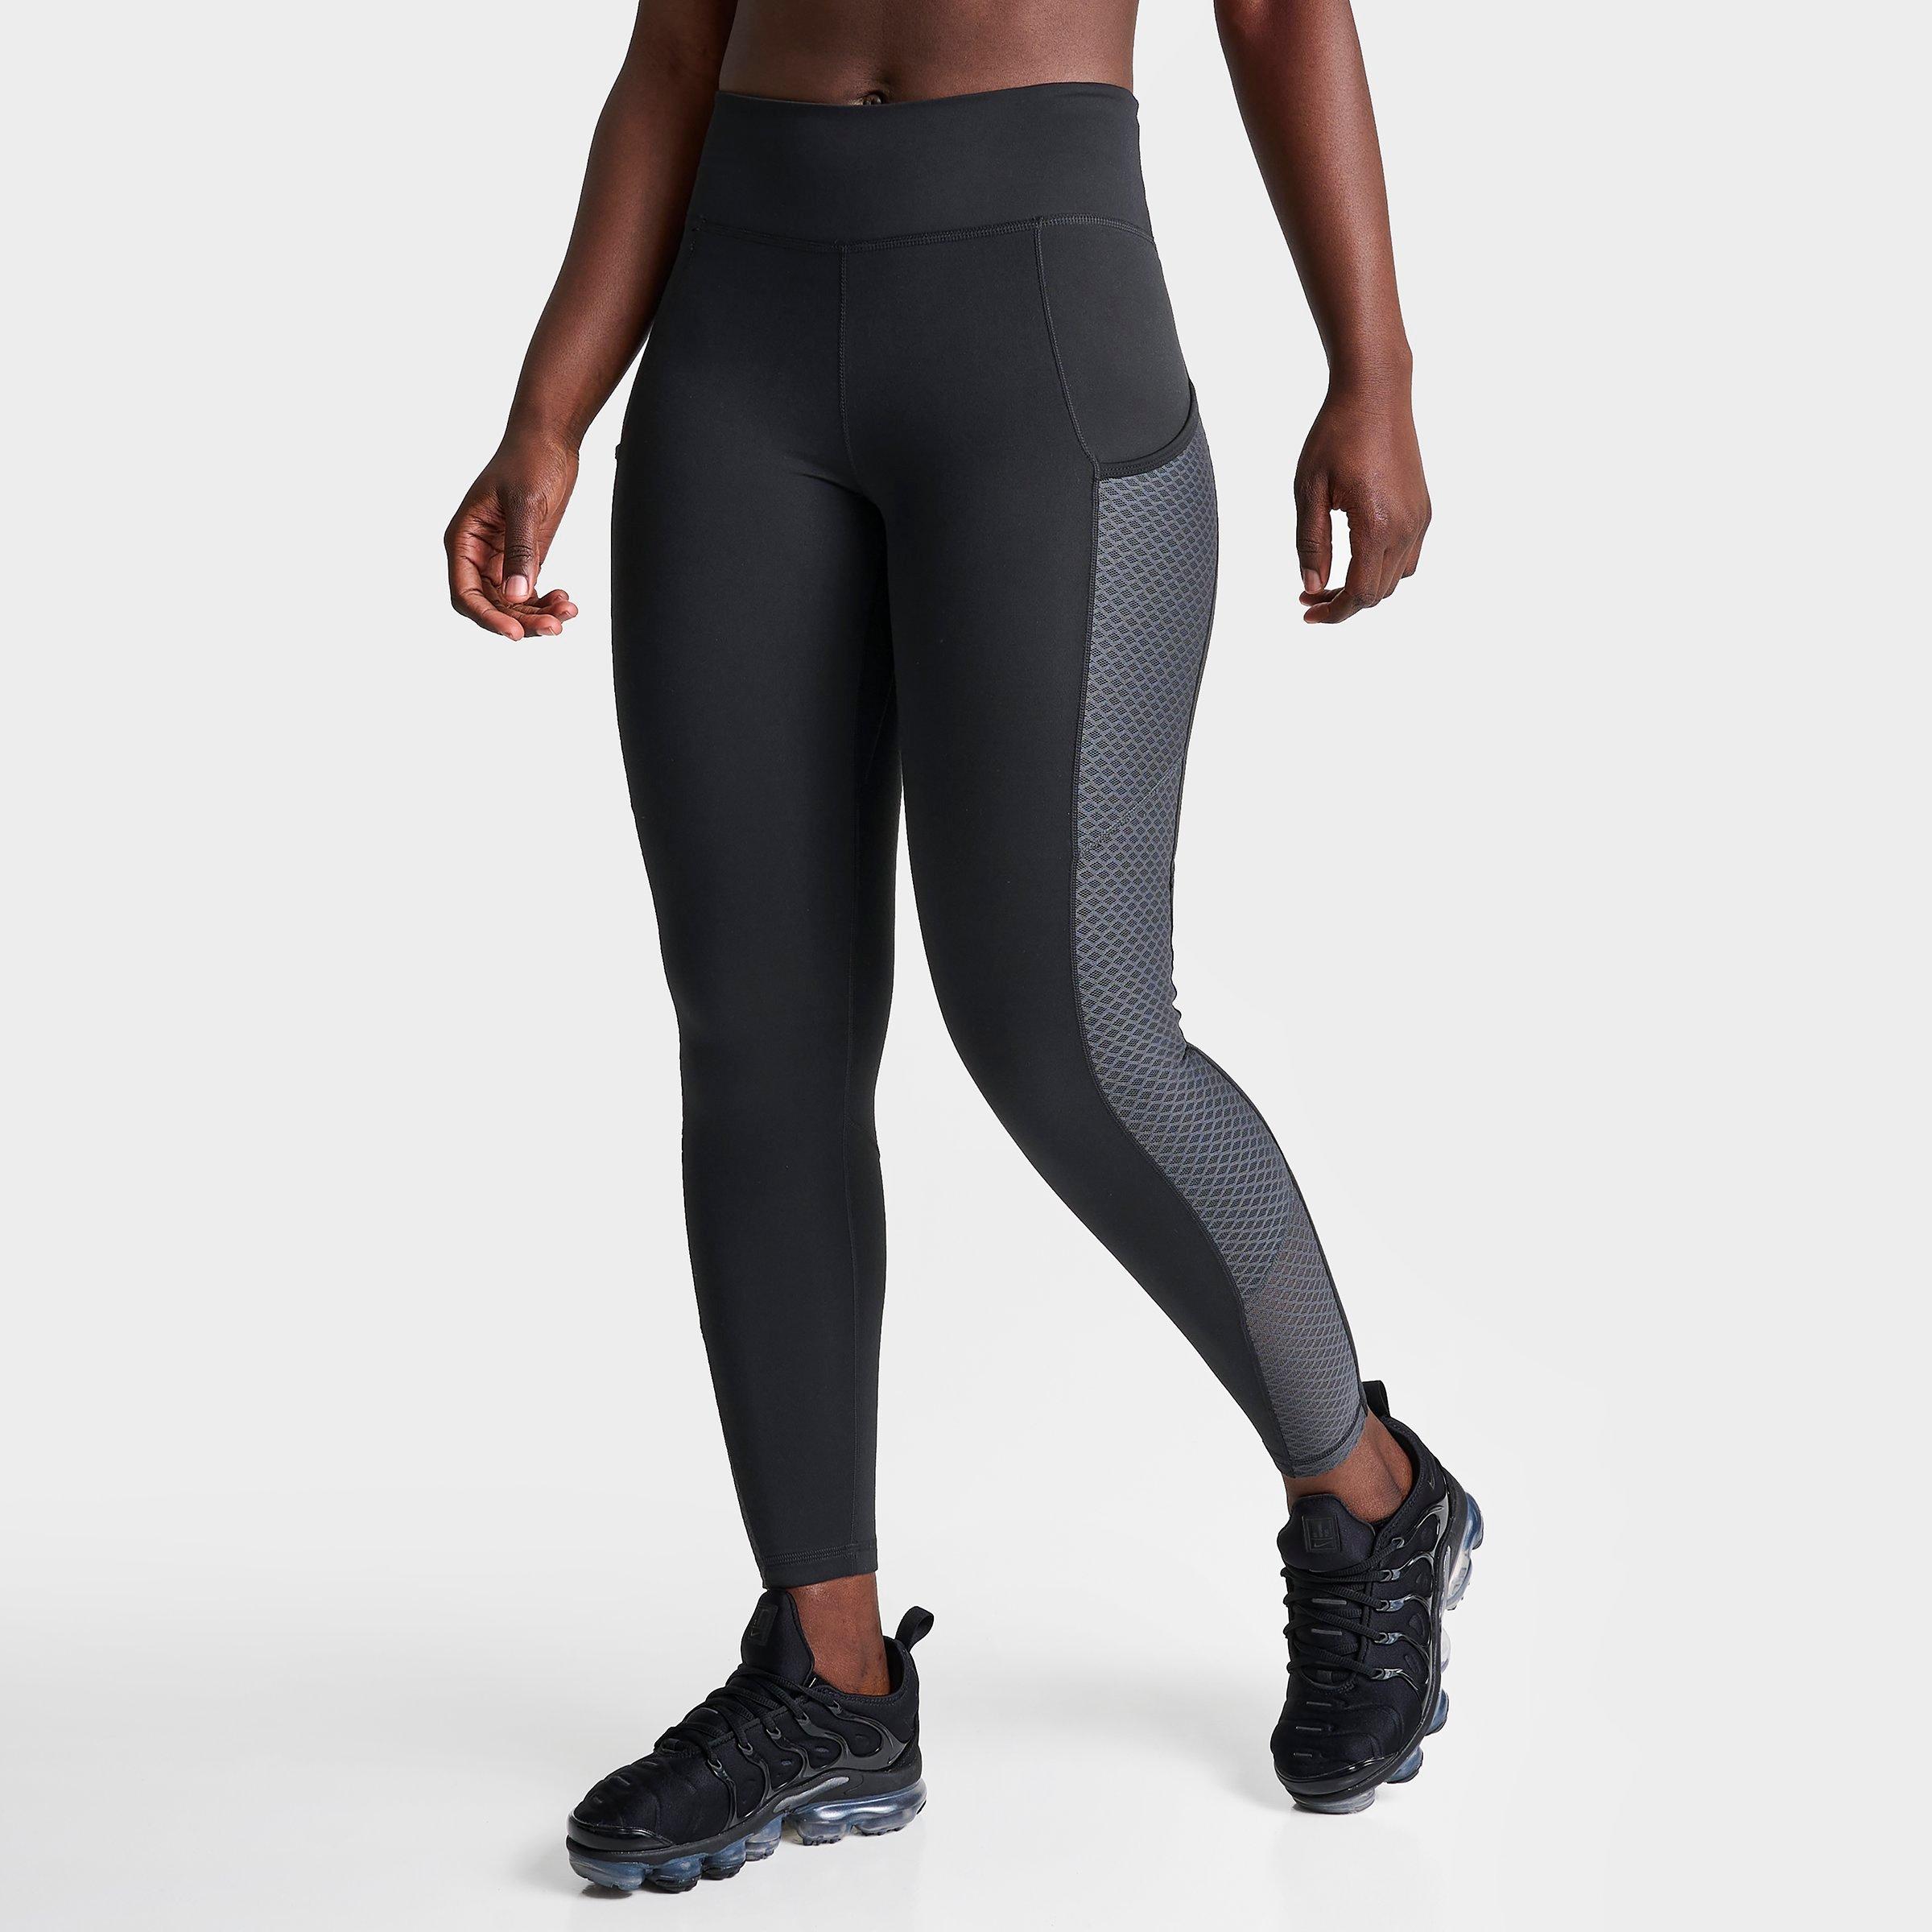 Women's Leggings High Waist Funny Slap Printed Workout Tights, Soft  Athletic Slim Fit Sweatpants Tights Yoga Pants